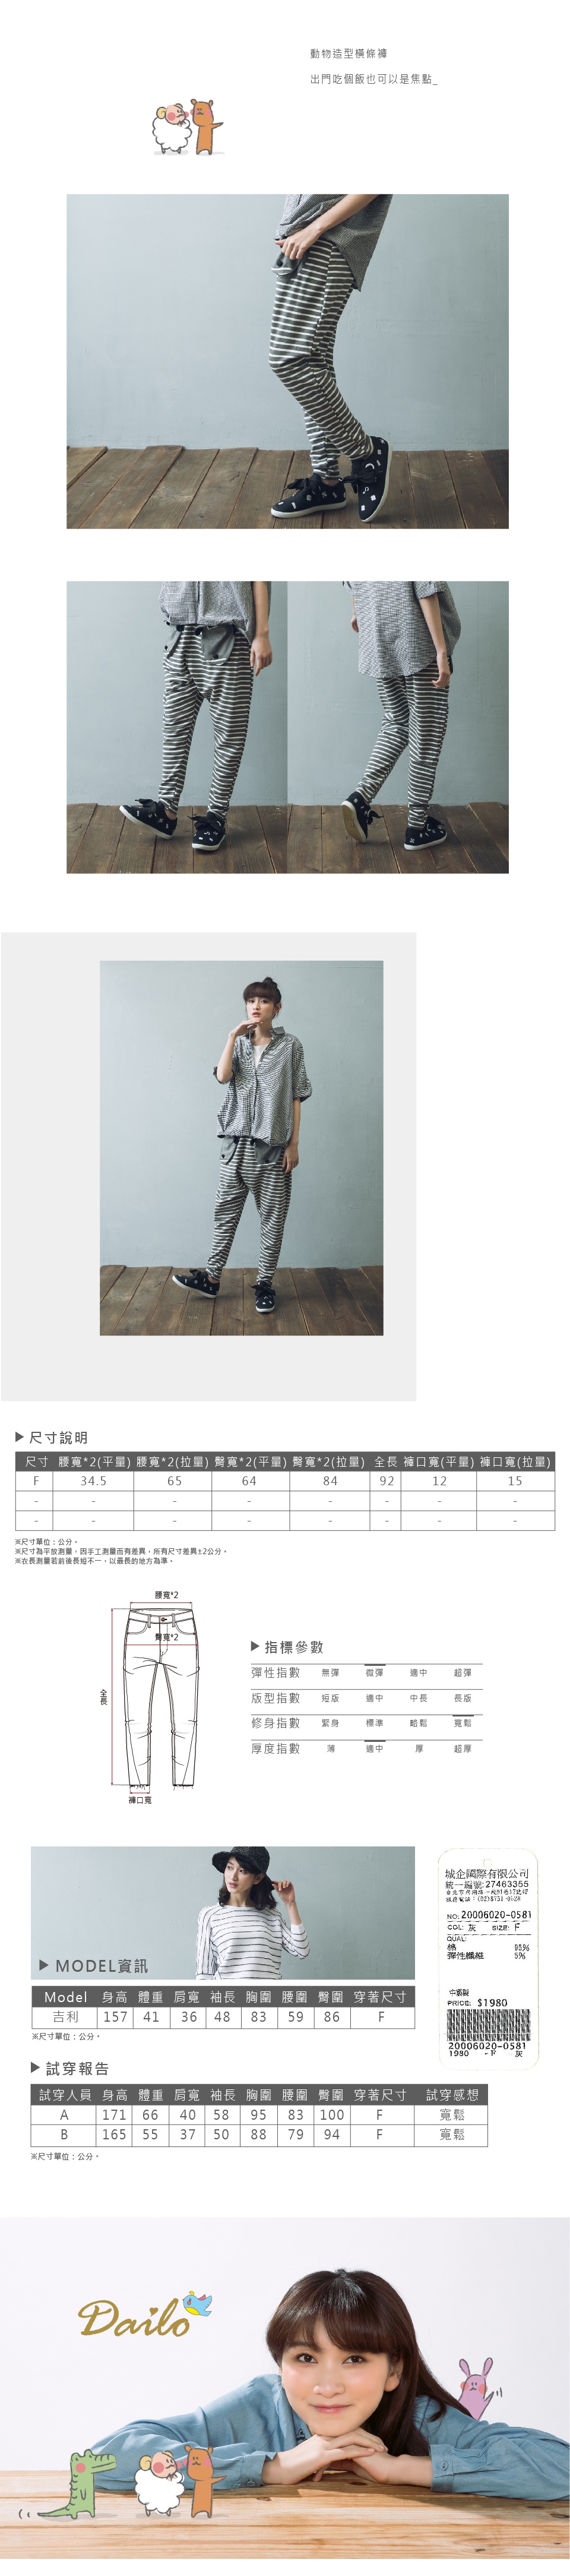 【Dailo】可愛立體動物造型條紋休閒棉褲(一色)